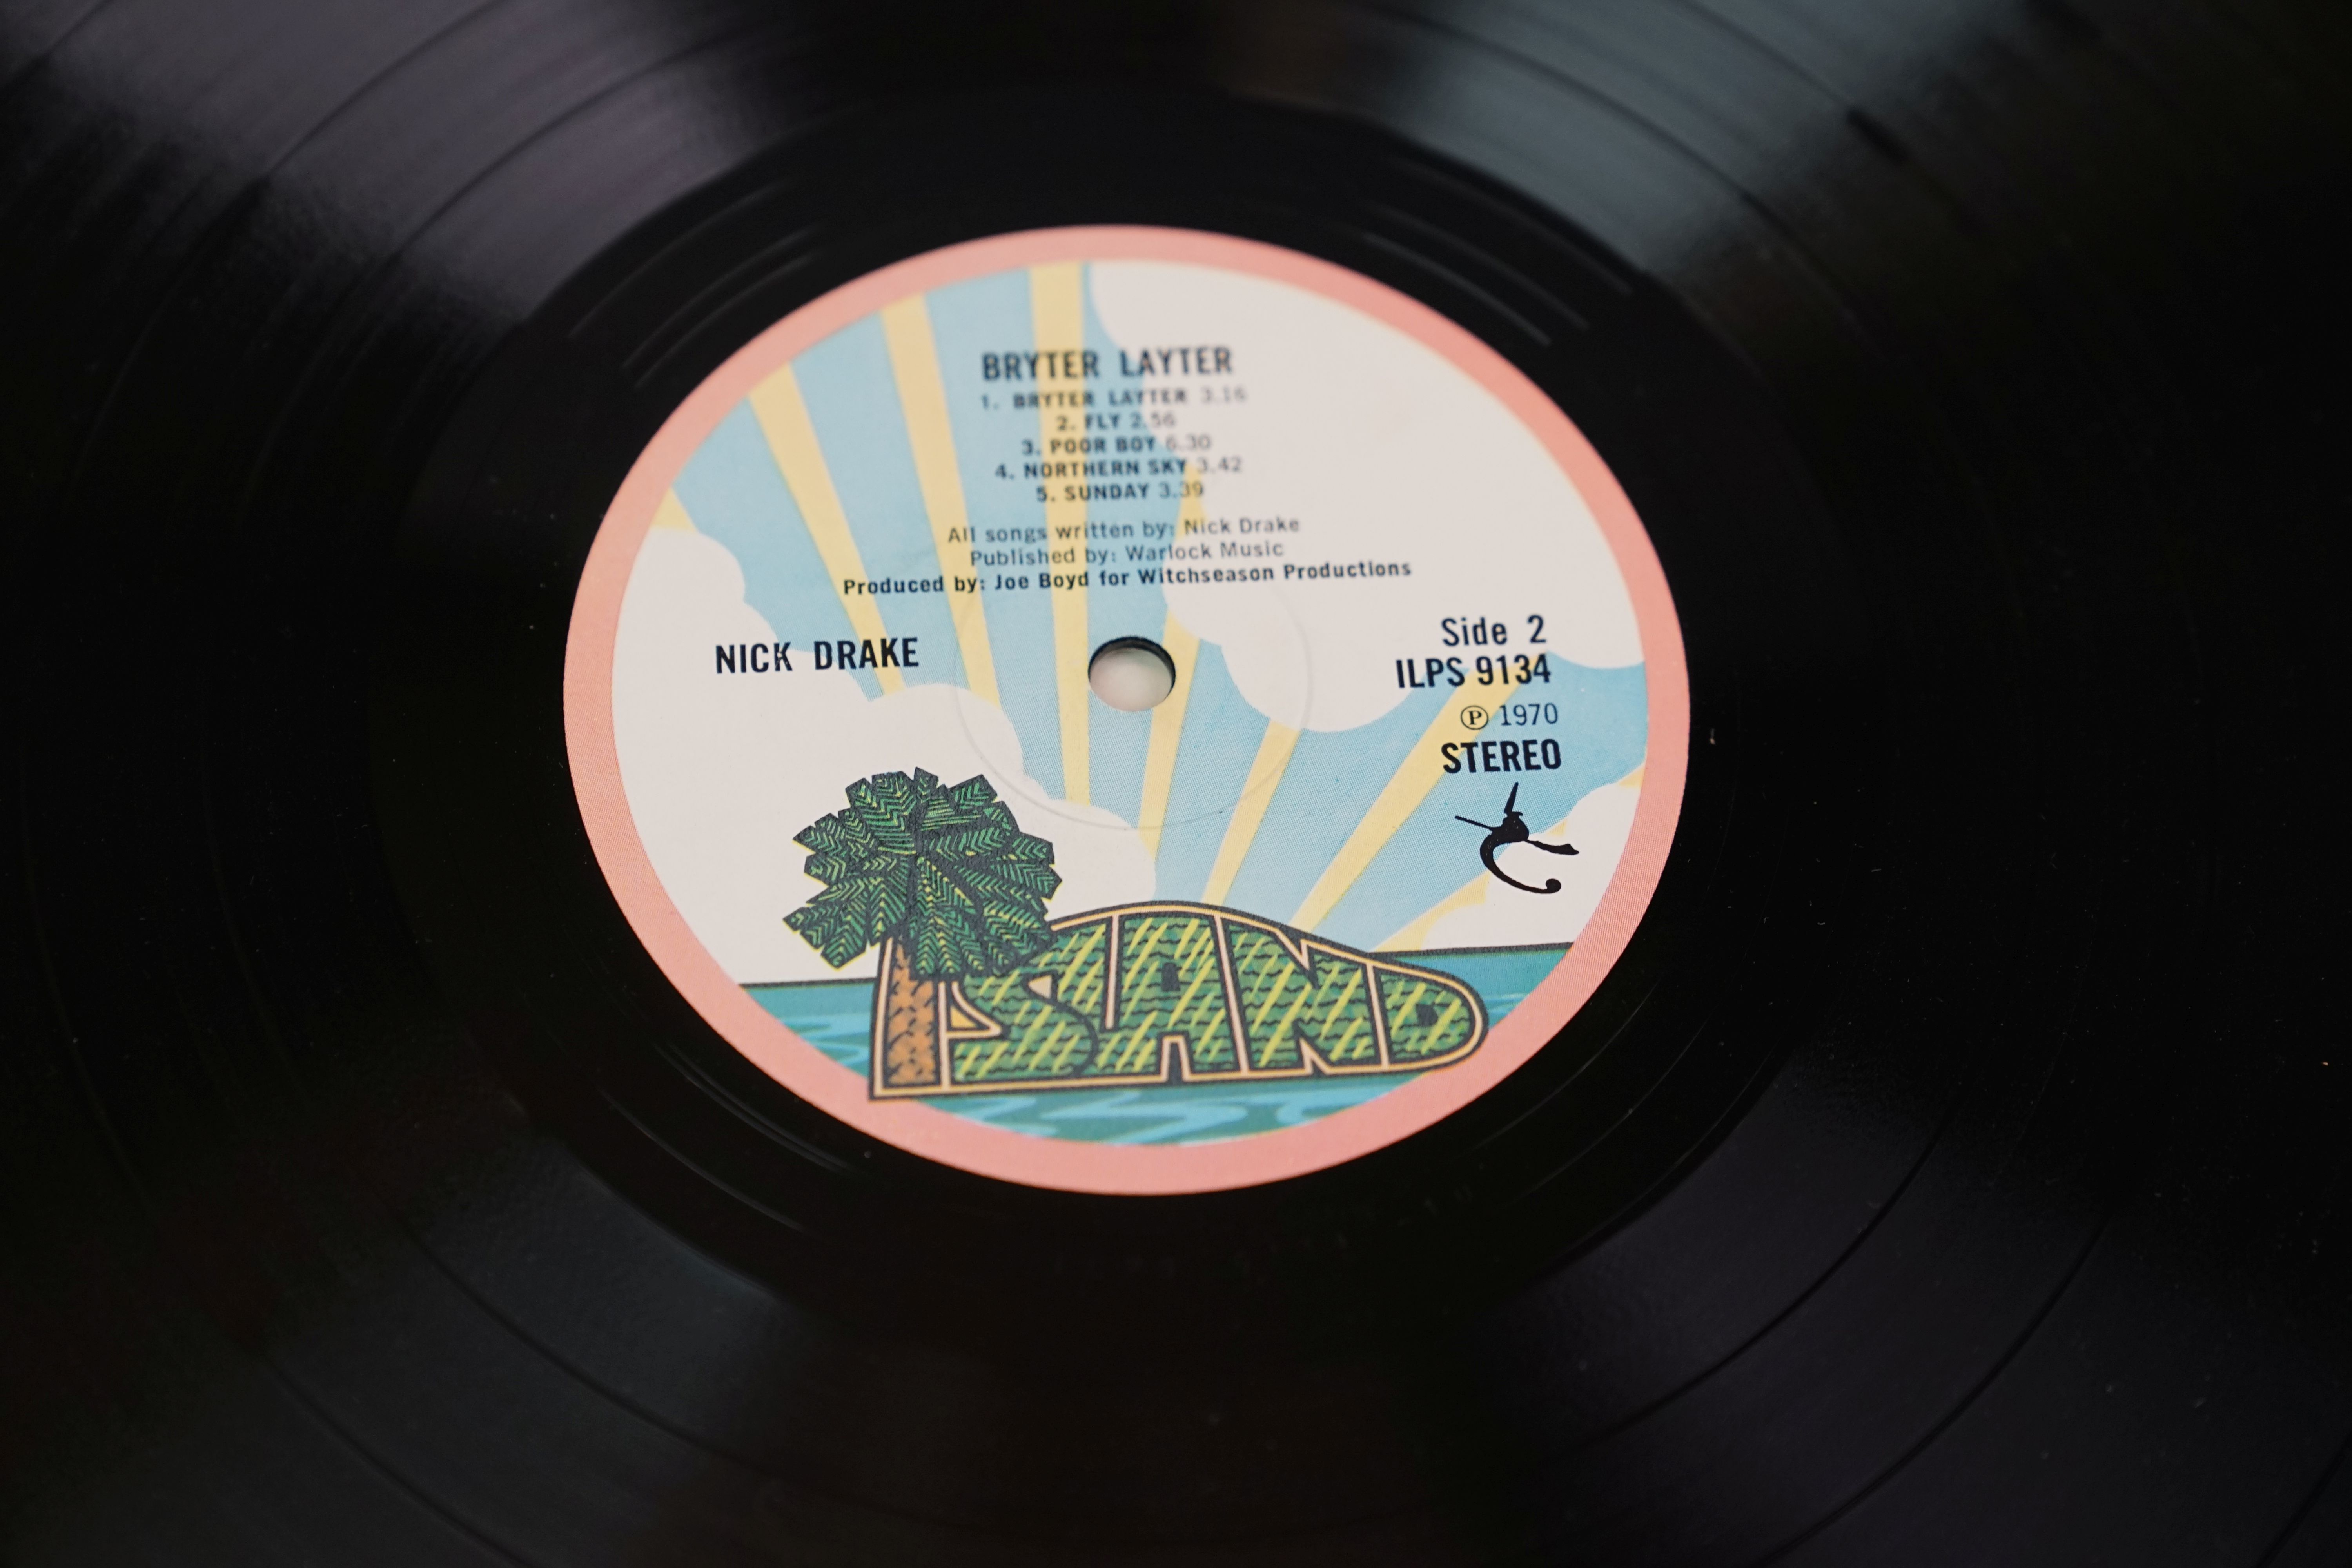 Vinyl - Nick Drake -Bryter Layter LP on Island ILPS9134, sleeve and vinyl vg++ - Image 6 of 6